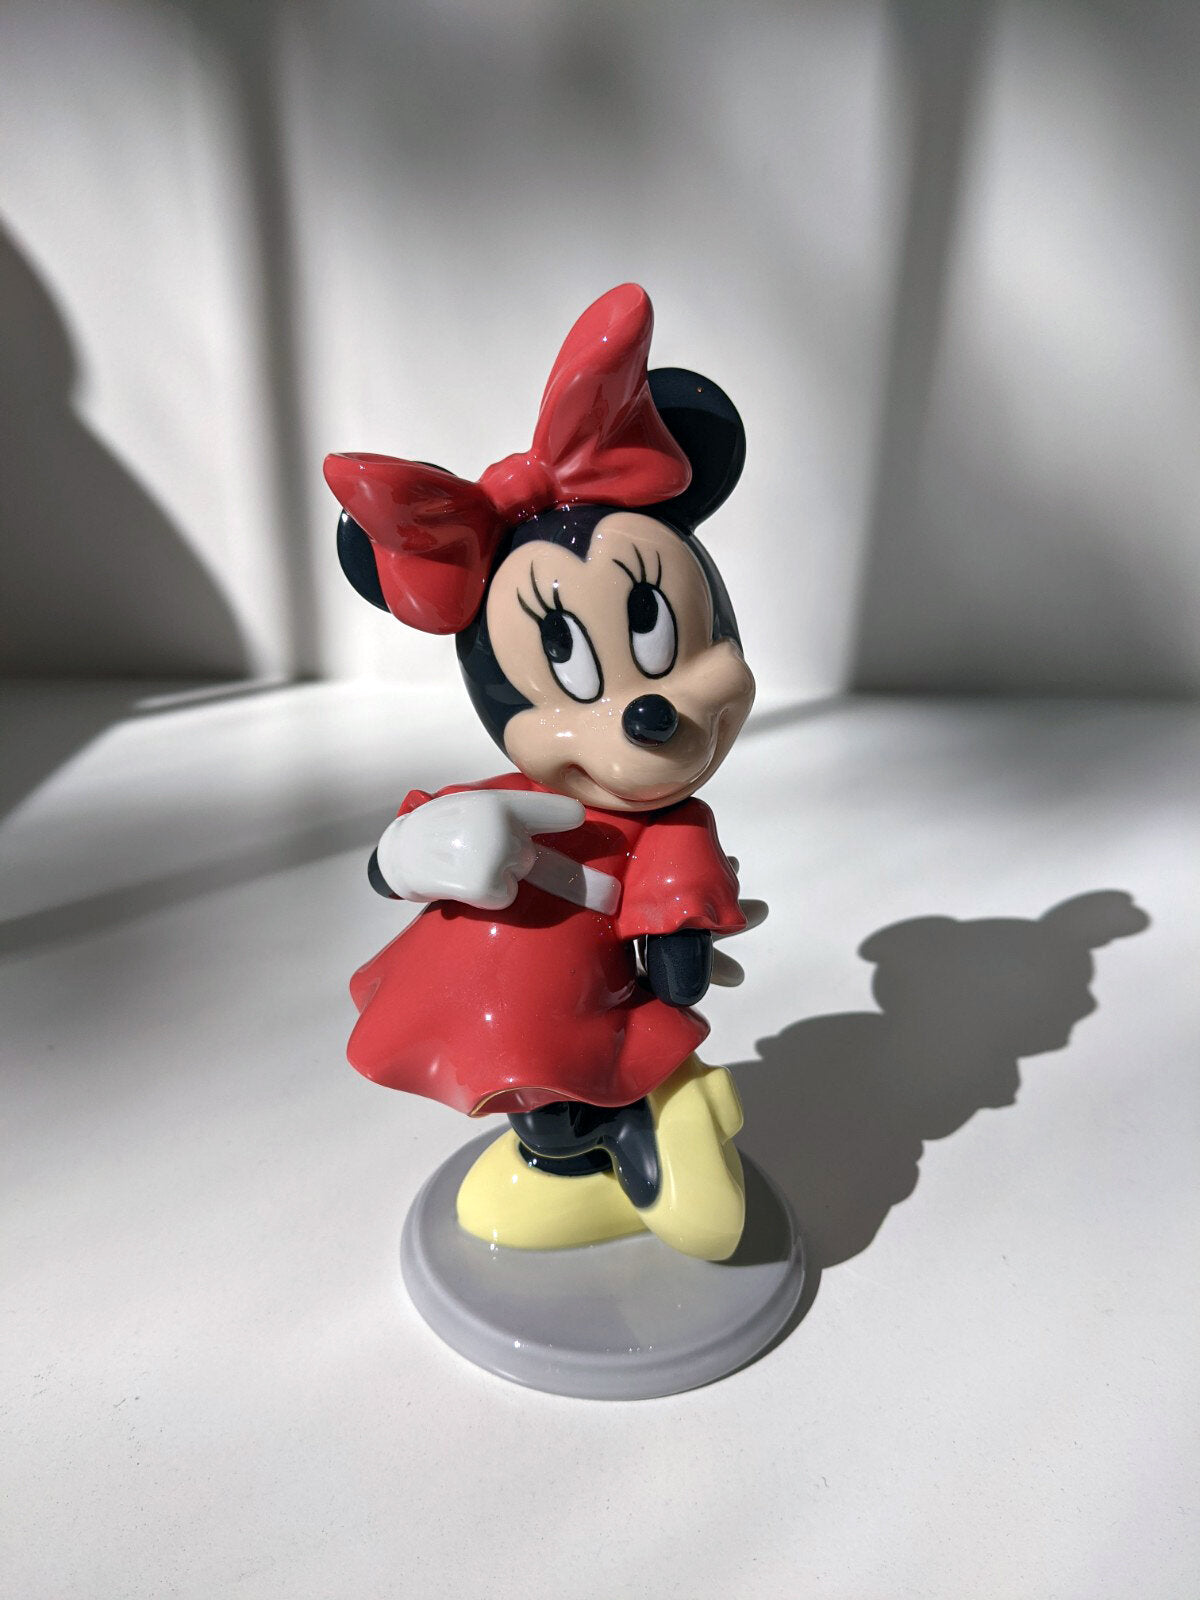 Official Minnie Mouse Sculpture